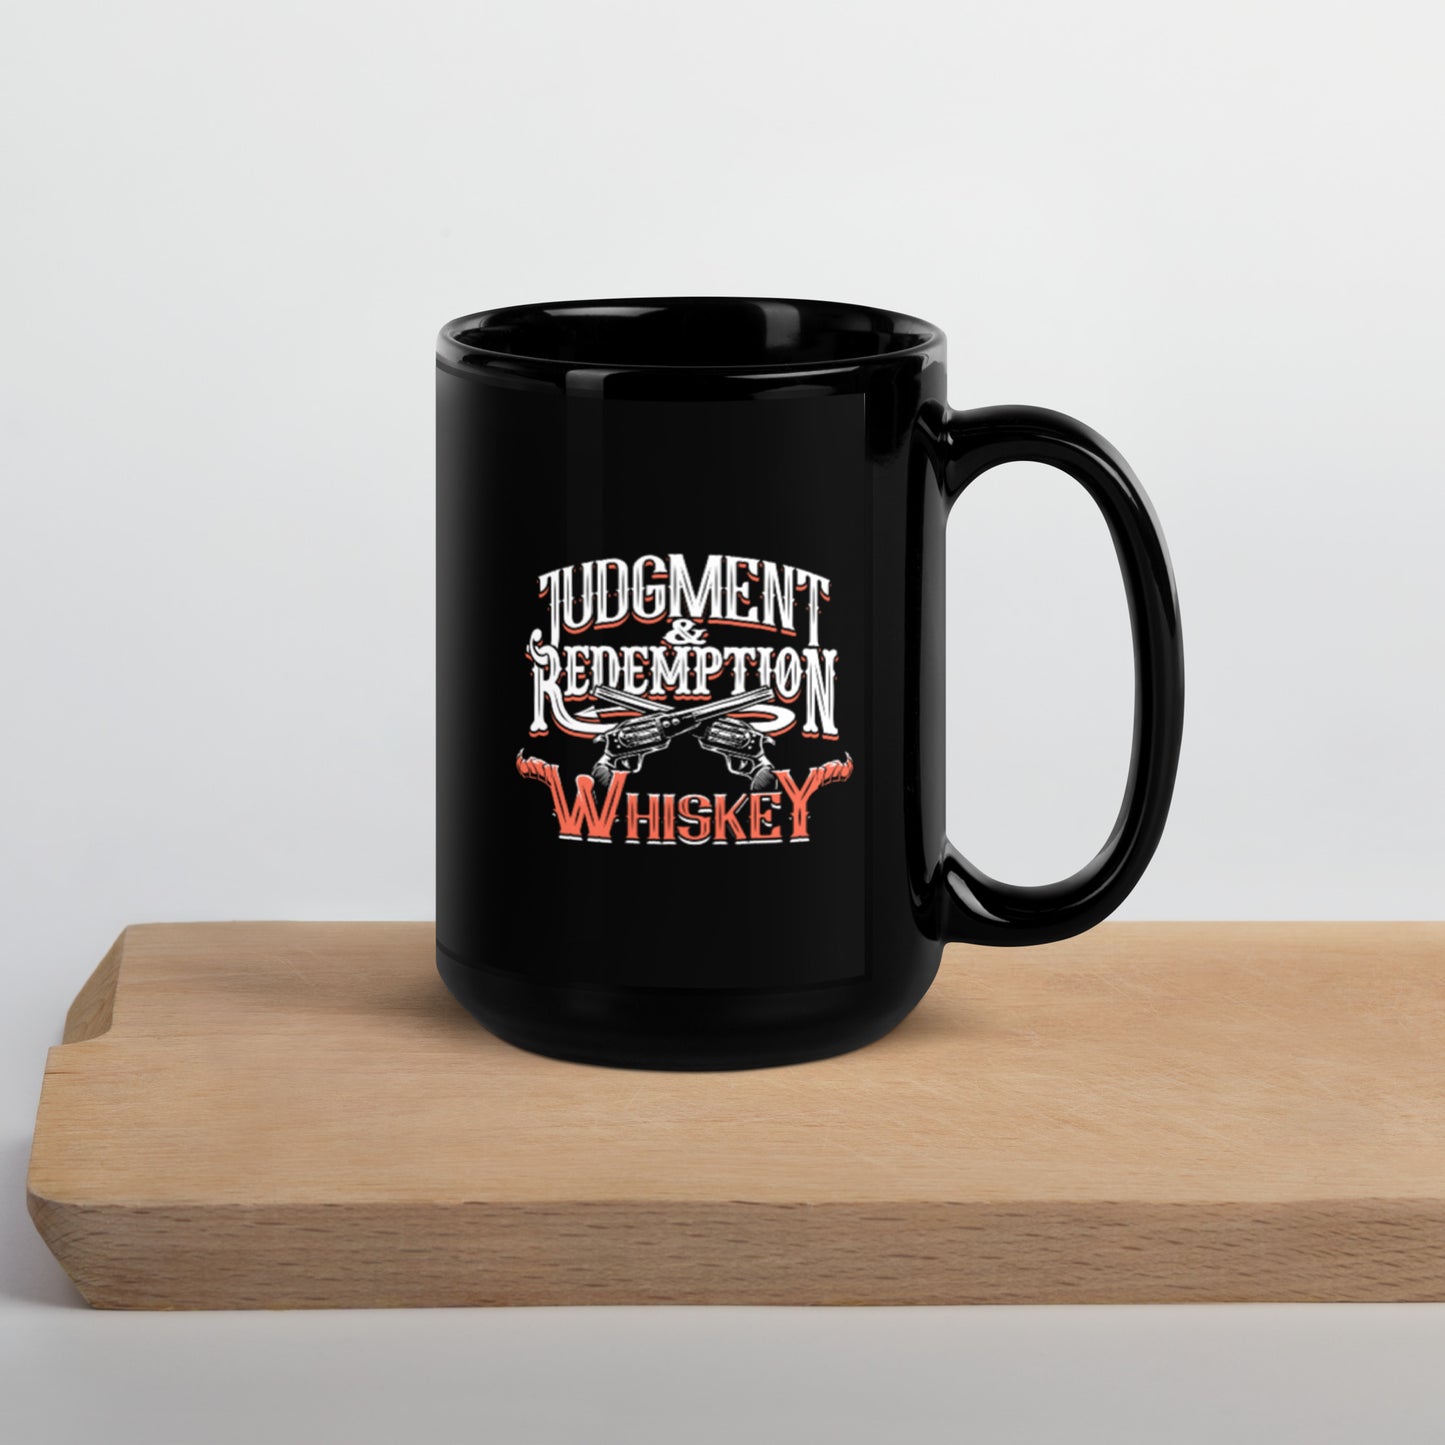 Judgment & Redemption Whiskey - Mug